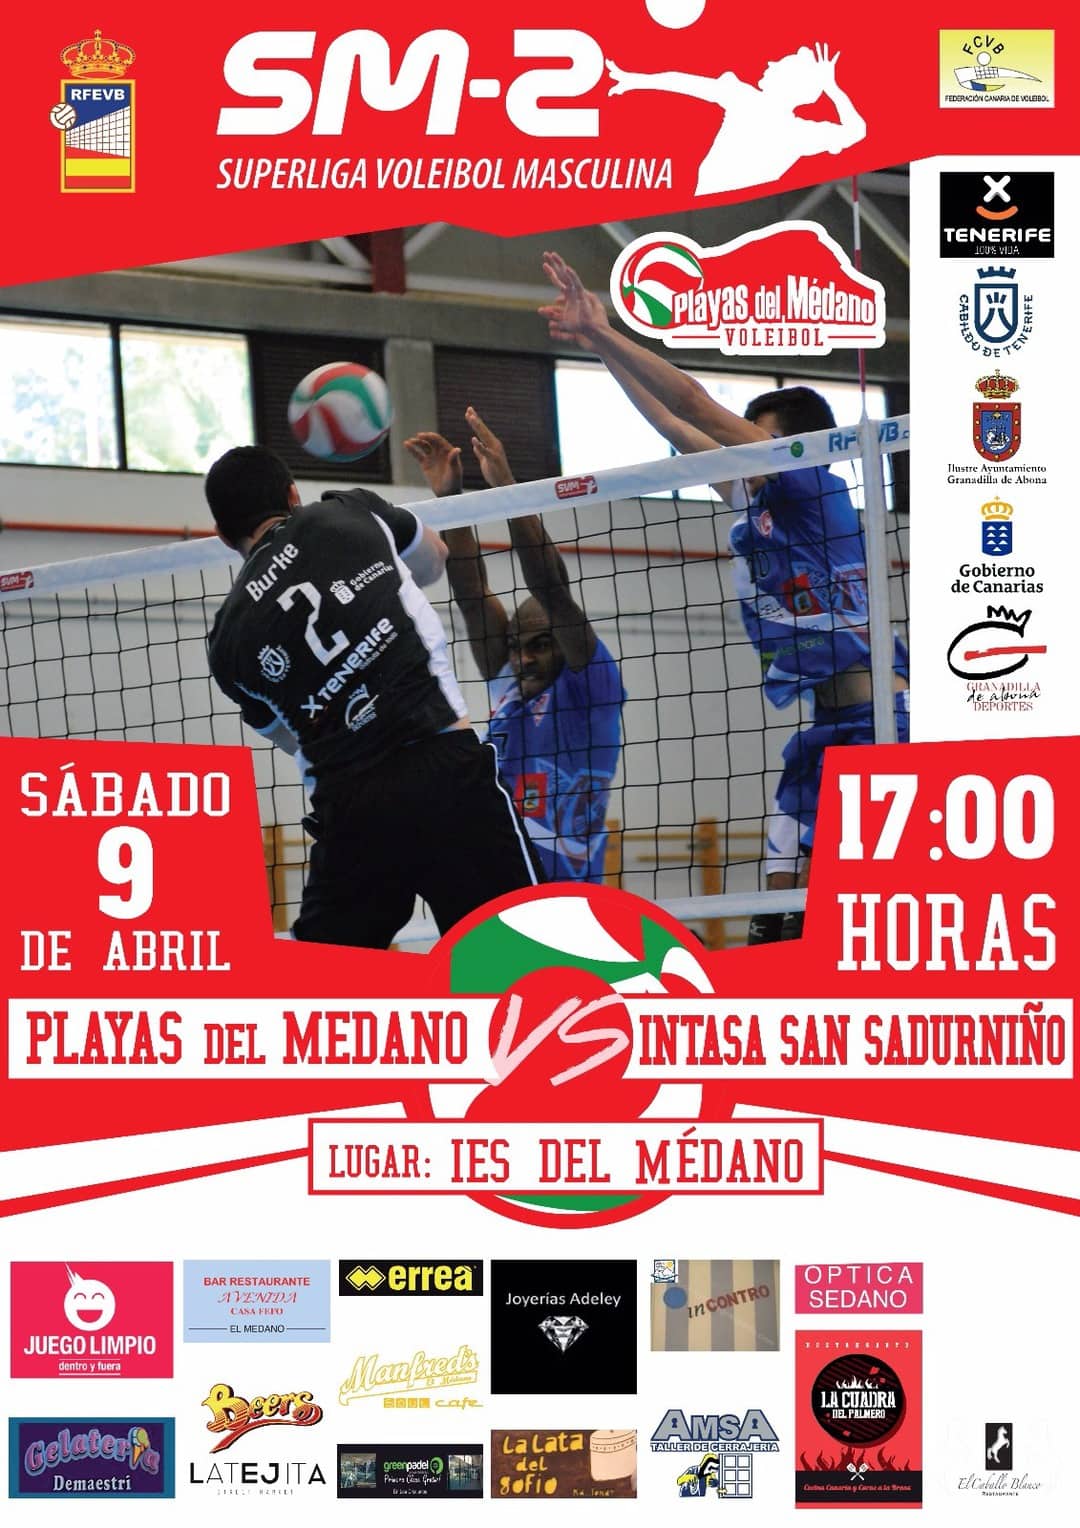 Superliga Voleibol Masculina: Playas del Médano – Intasa San Sadurniño